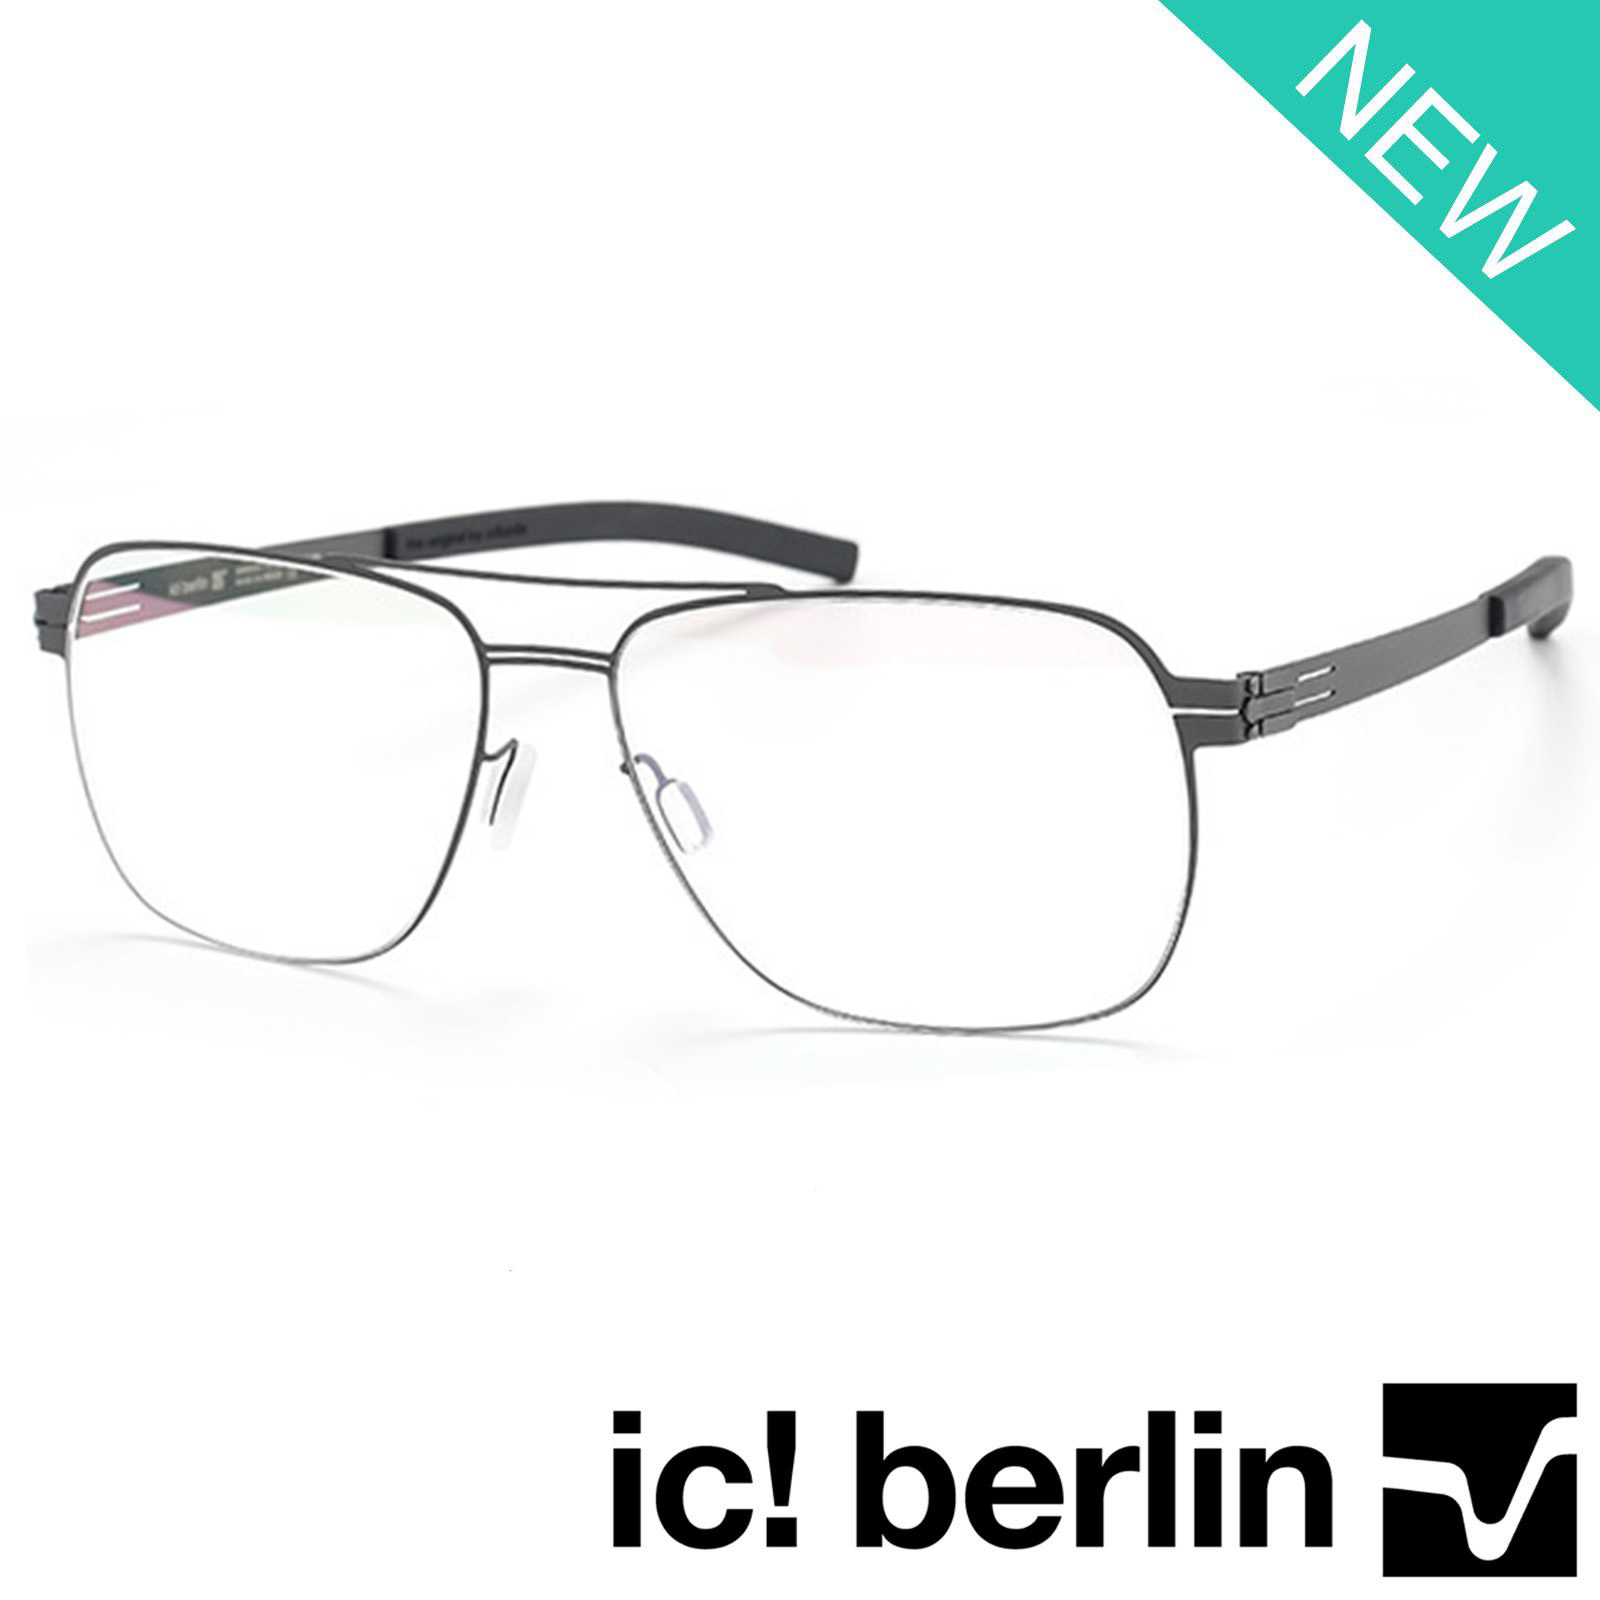 Ic Berlin แว่นตา รุ่น 032 C-2 สีเทา กรอบเต็ม Square shape ทรงเหลี่ยม ขาข้อต่อ วัสดุ สแตนเลส สตีล (สำหรับตัดเลนส์) กรอบแว่นตา สวมใส่สบาย น้ำหนักเบา ไม่ตกเทรนด์ Full frame Eyeglass leg joints Stainless Steel material Eyewear Top Glasses